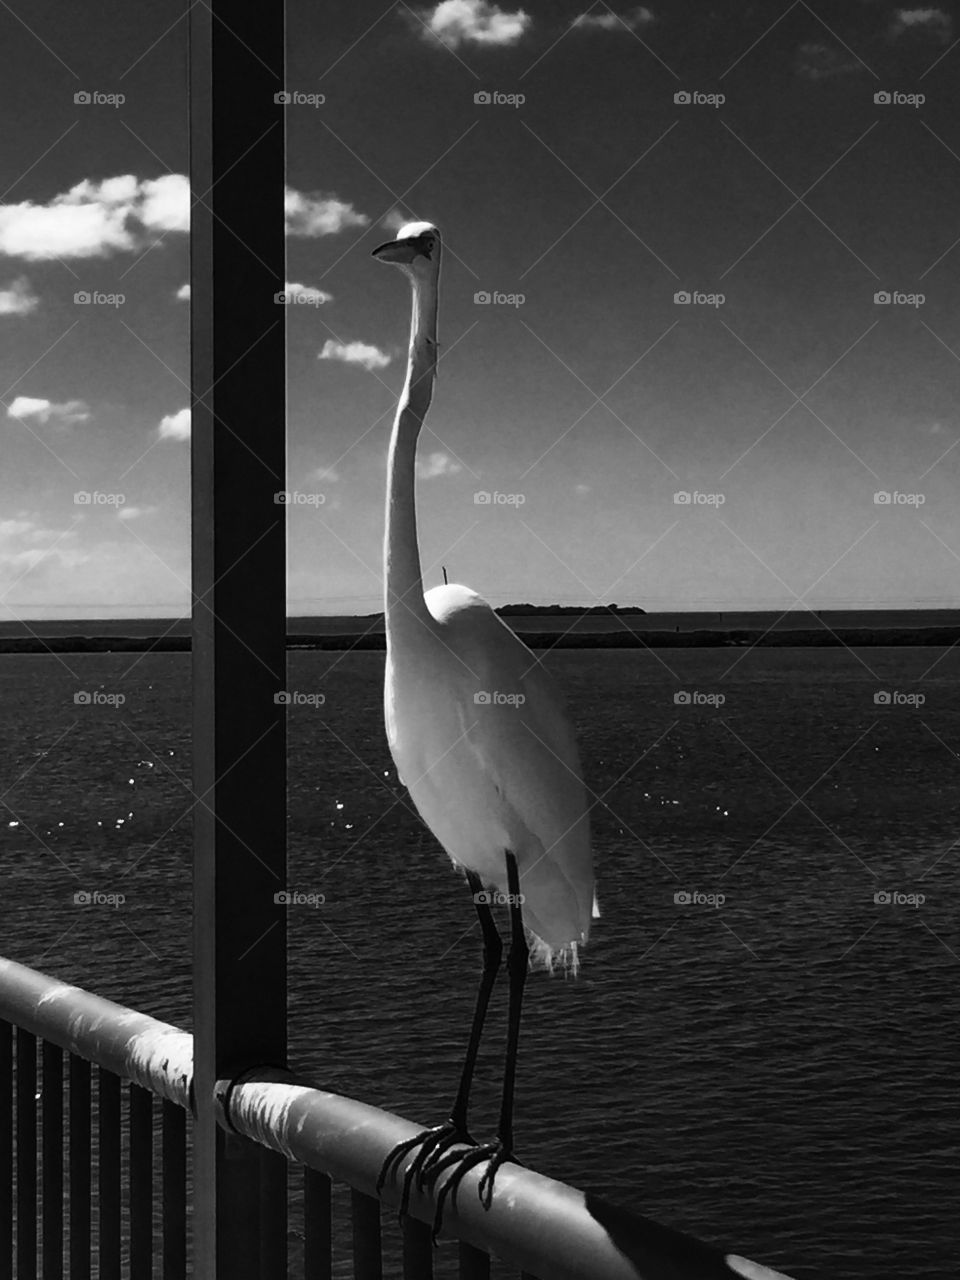 White bird at the ocean in black & white